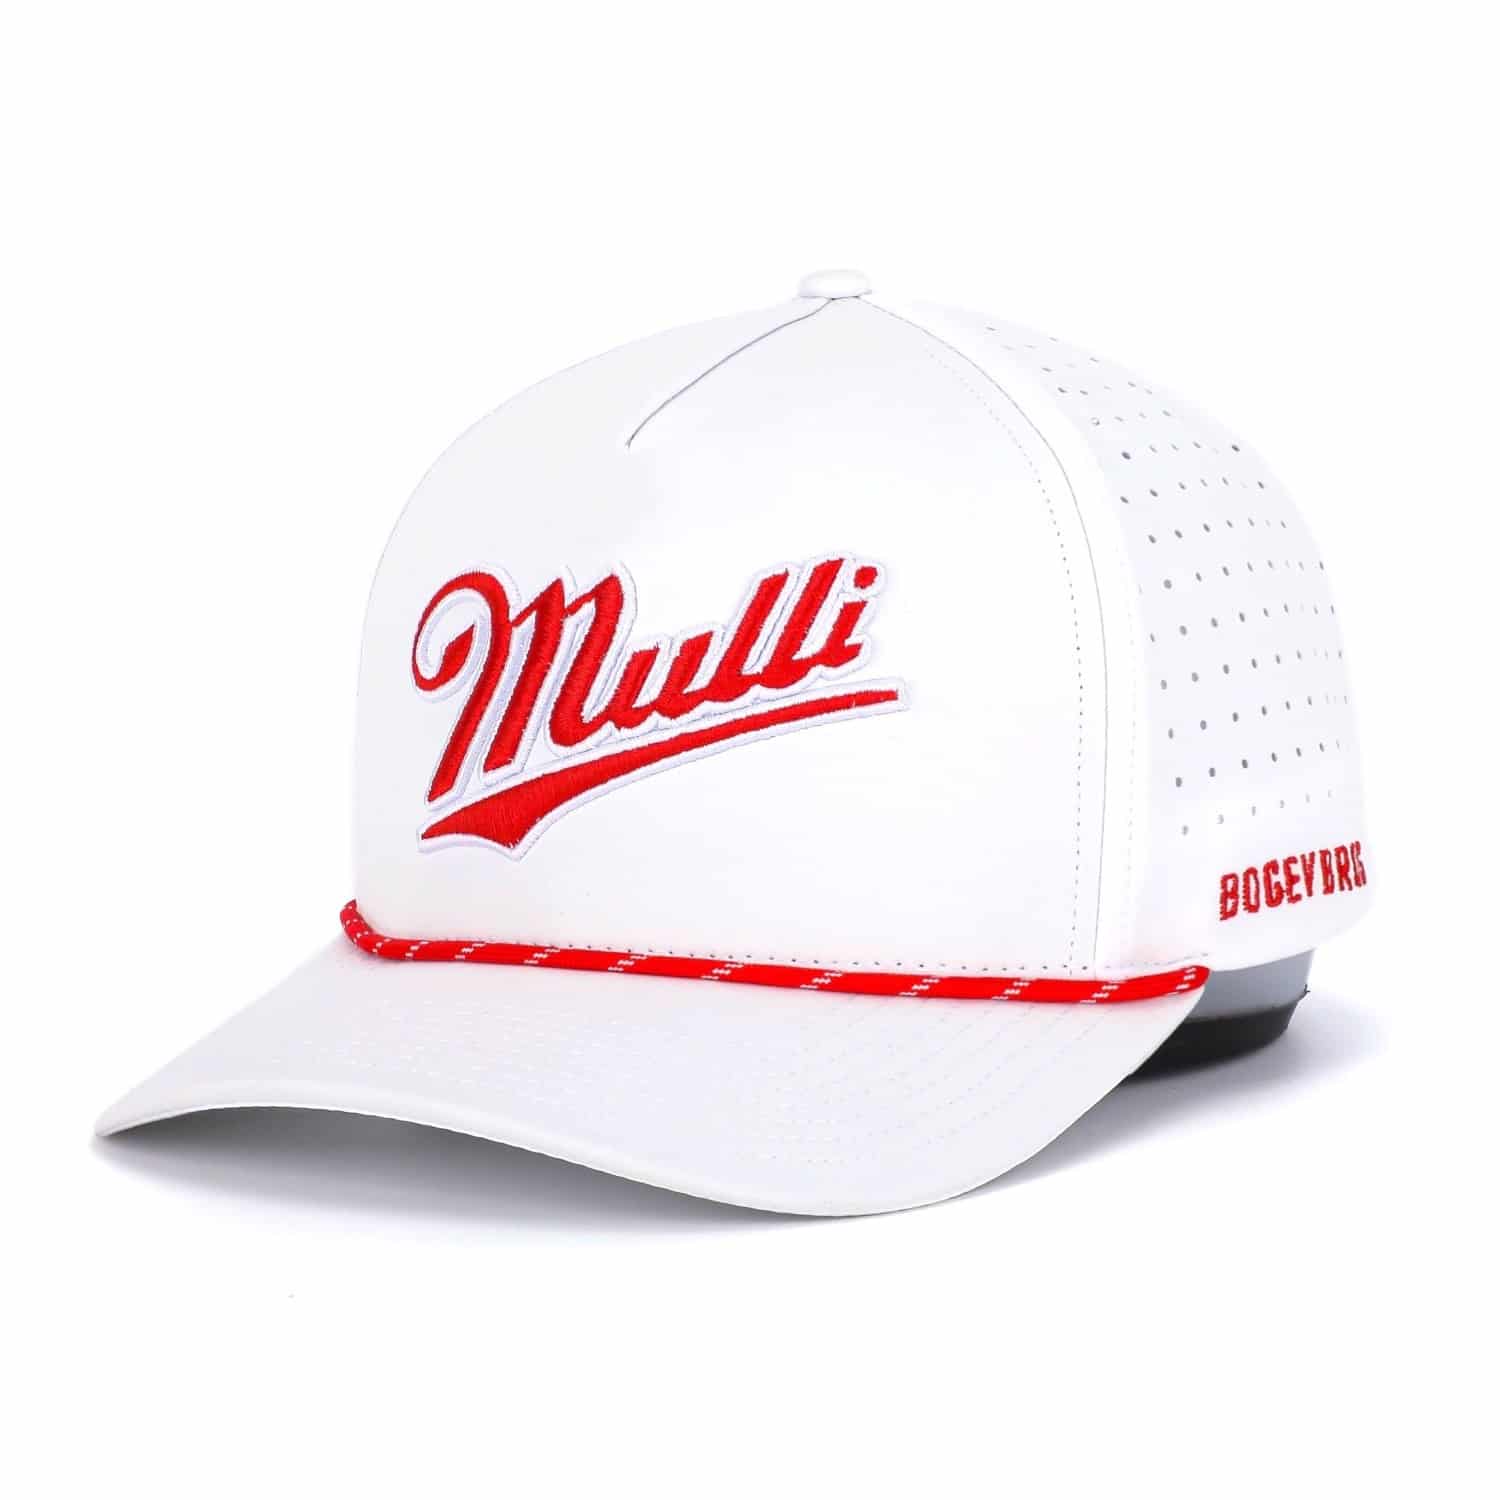 Mulli - Performance Golf Rope Hat - Bogey Bros